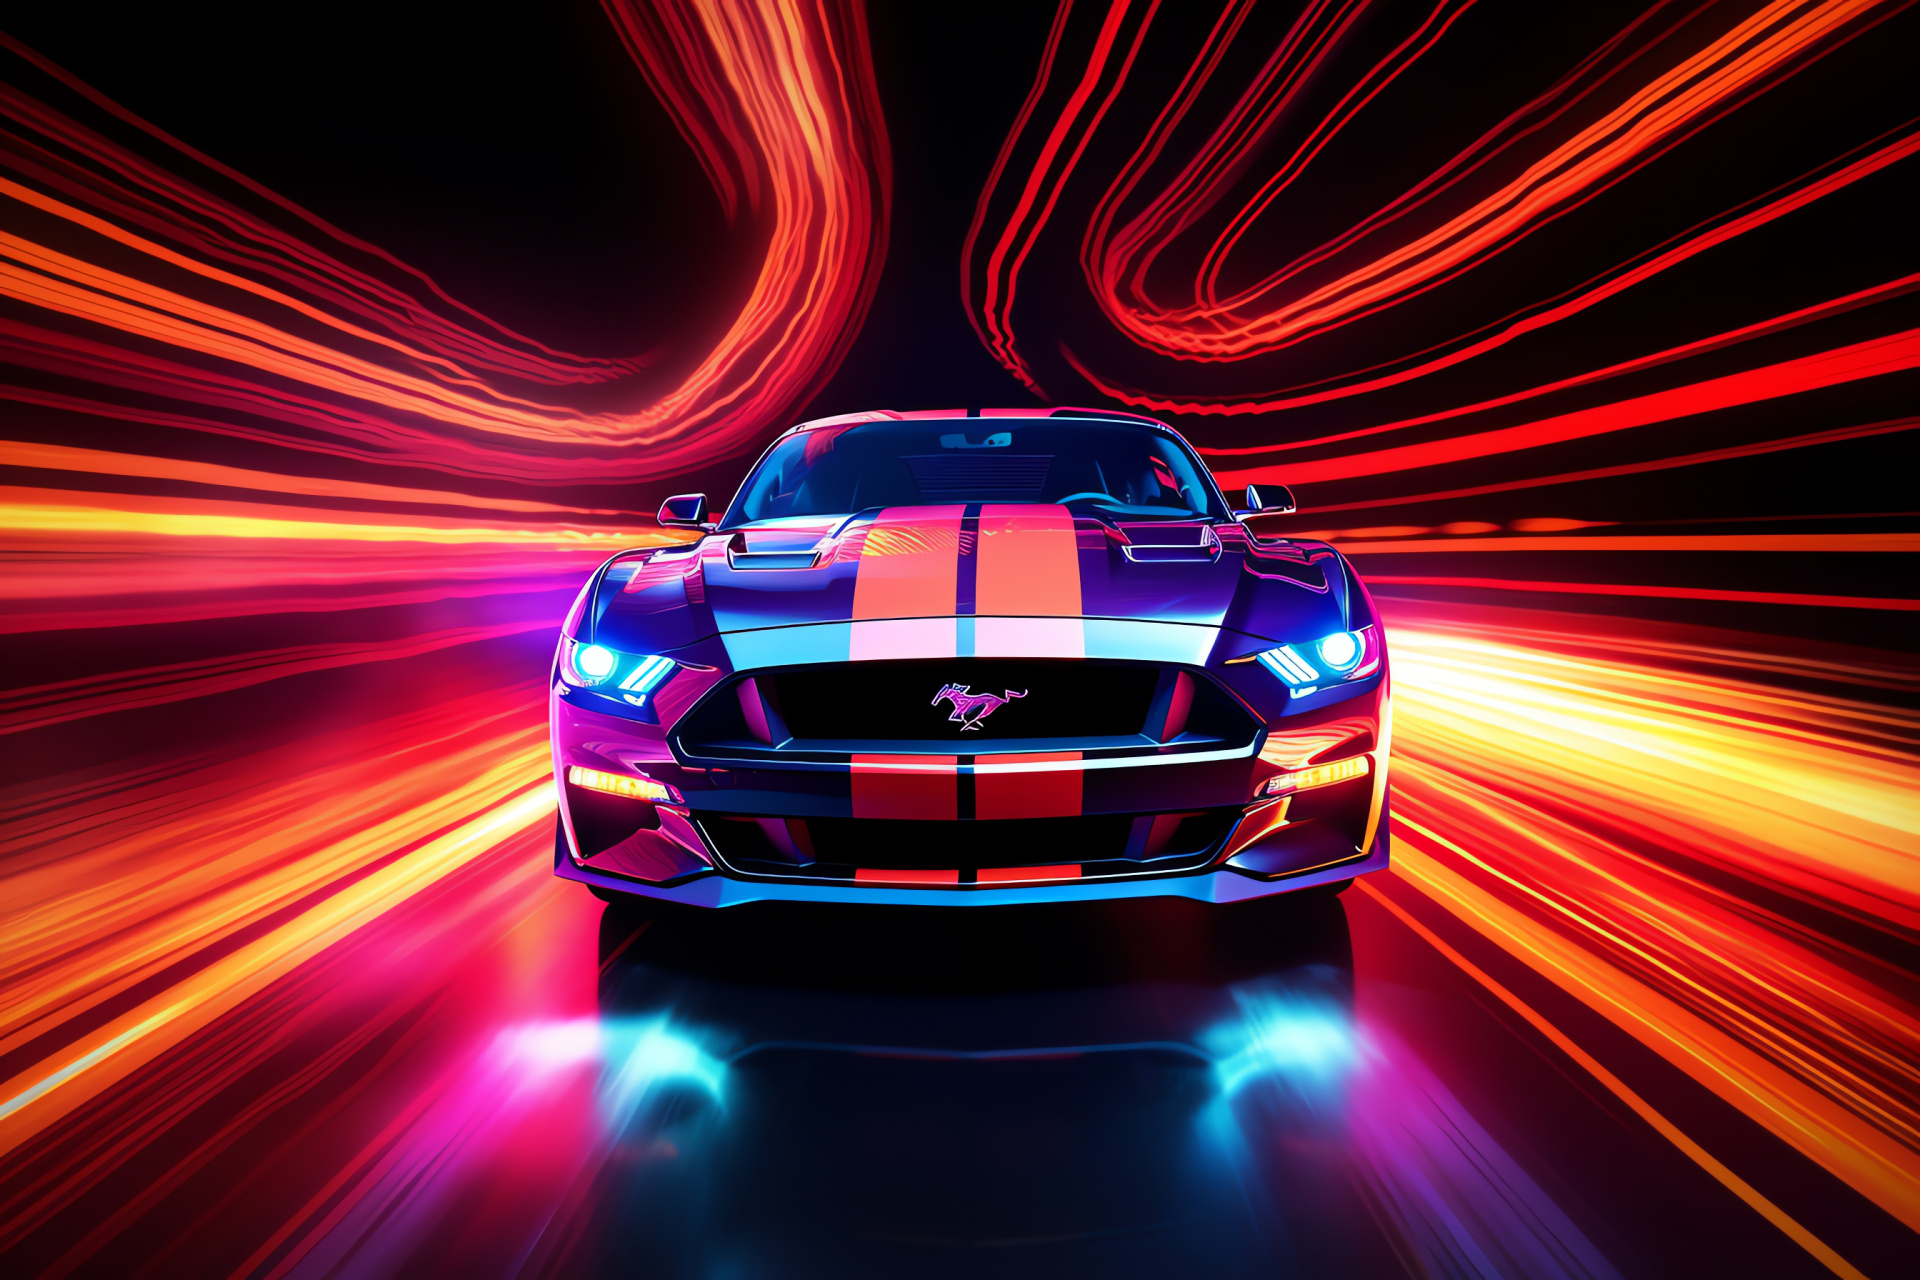 Glowing Mustang presence, Illuminated streak backdrop, Wide Mustang stance, Vibrant neon tones, Electric sportiness, HD Desktop Image